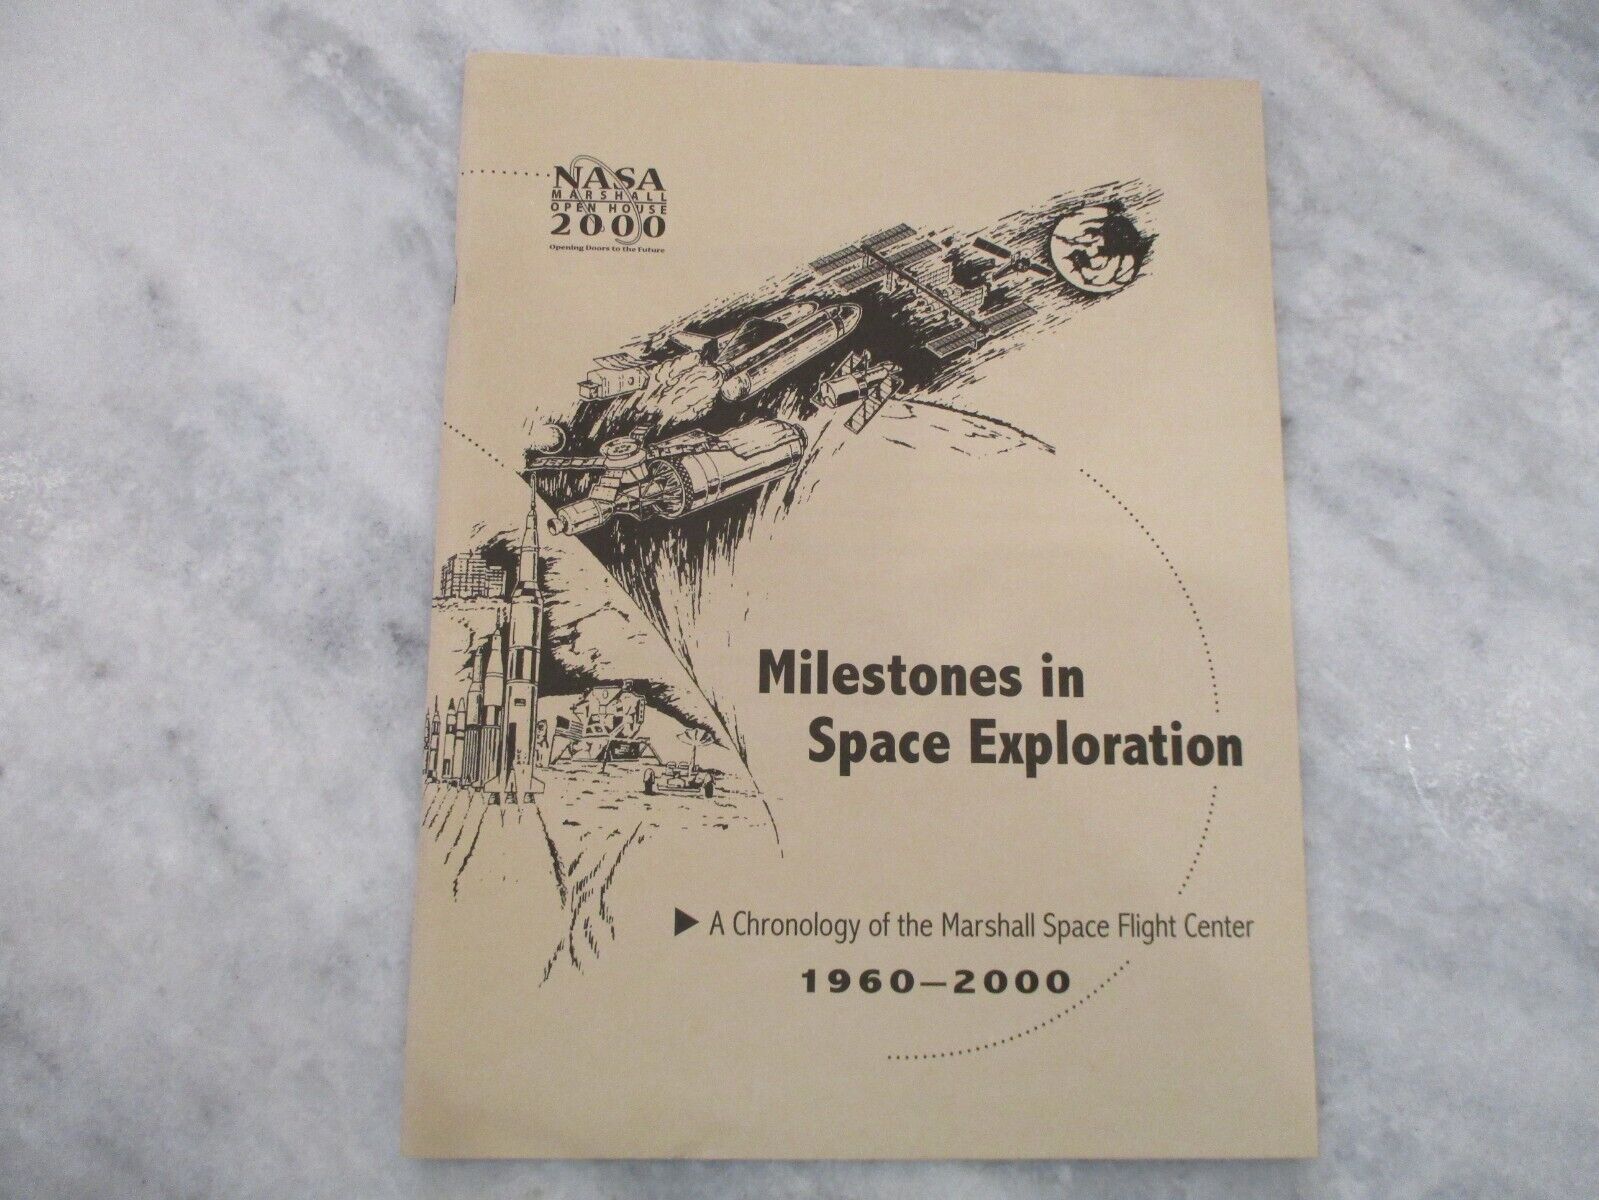 2000 NASA MSFC OPEN HOUSE & CHRONOLOGY MILESTONES IN SPACE EXPLORATION 1960-2000